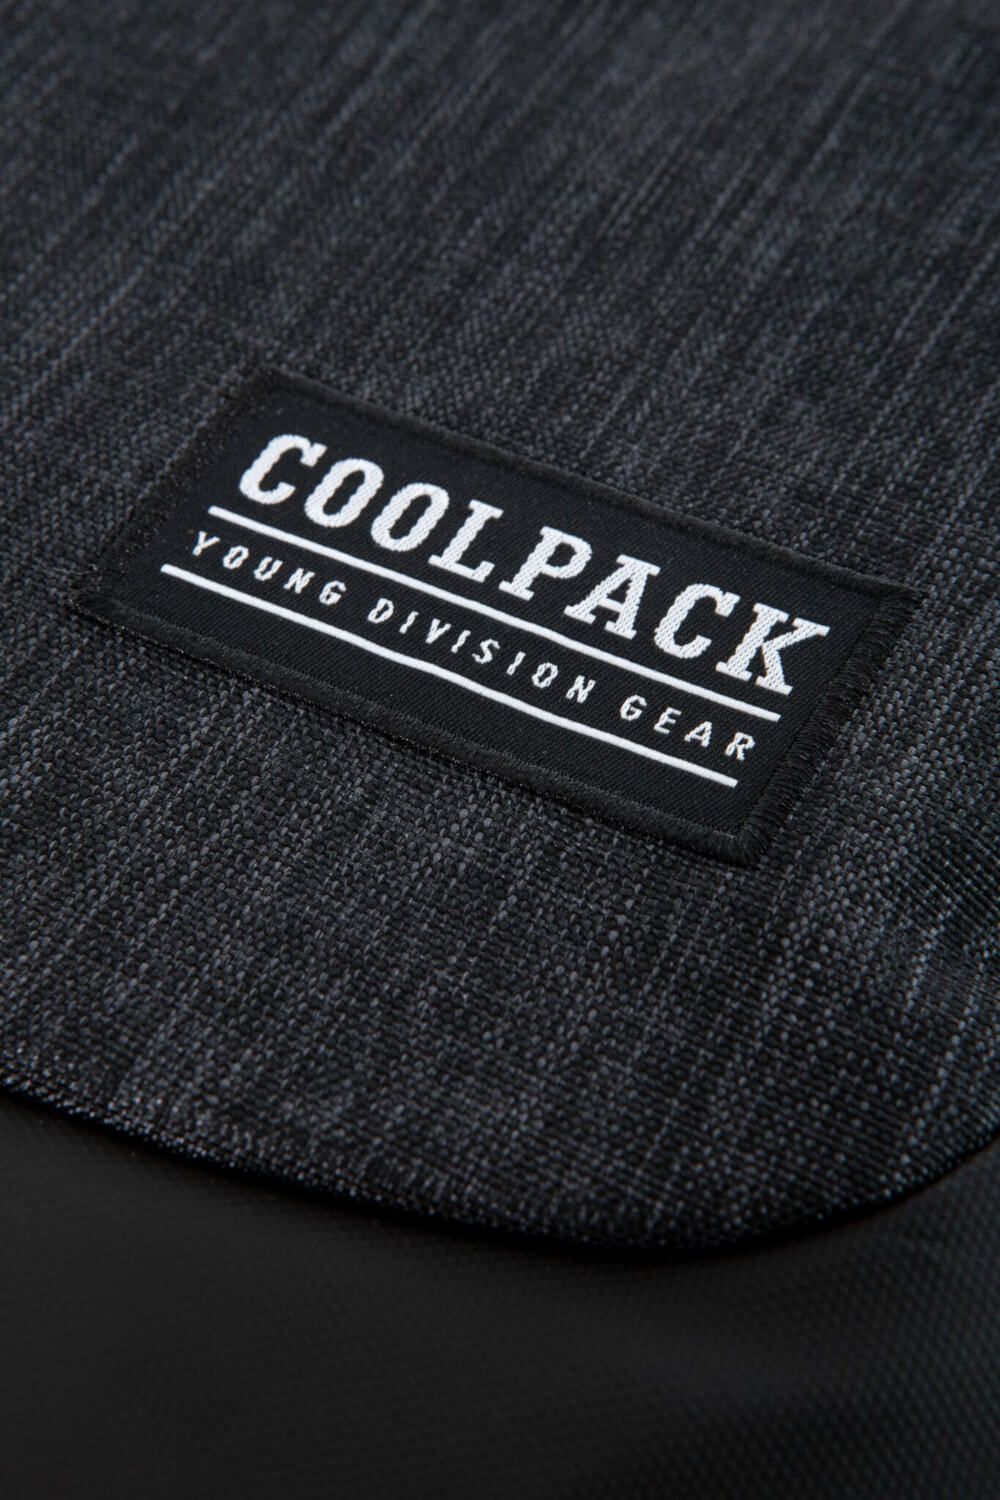 Plecak trzykomorowy 27l CoolPack Soul Snow Black, C10164